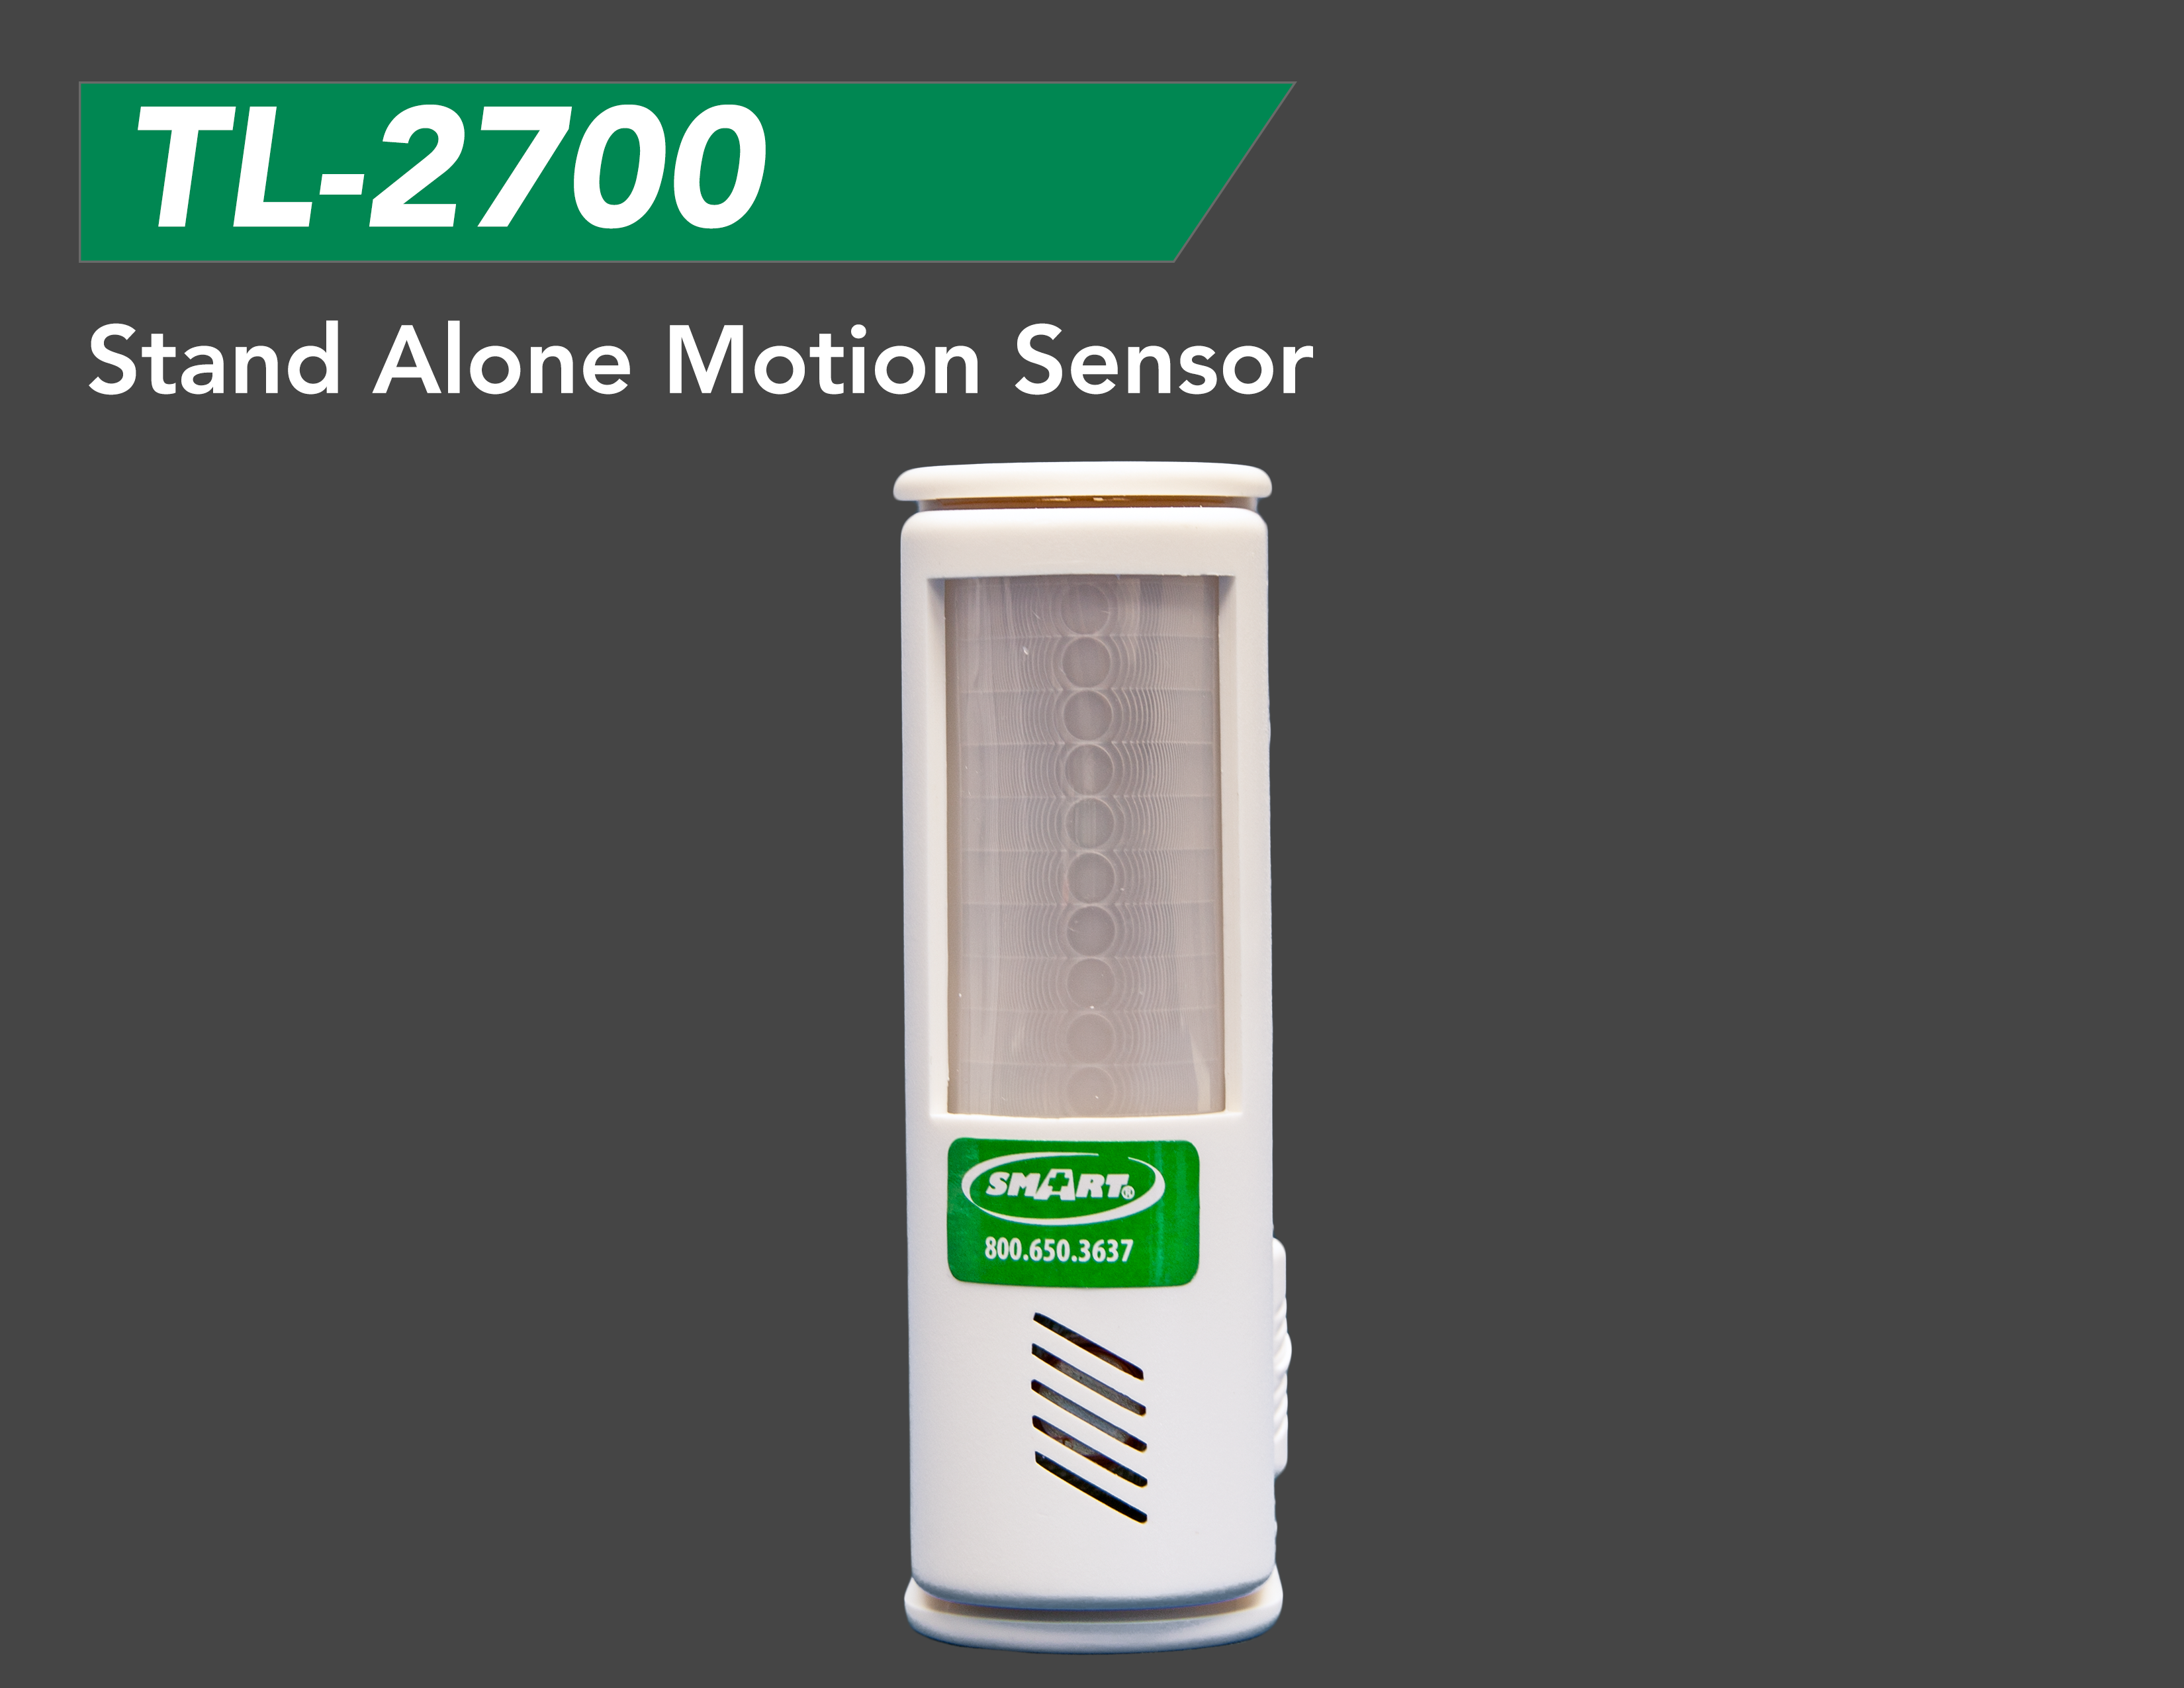 Stand Alone Motion Sensor